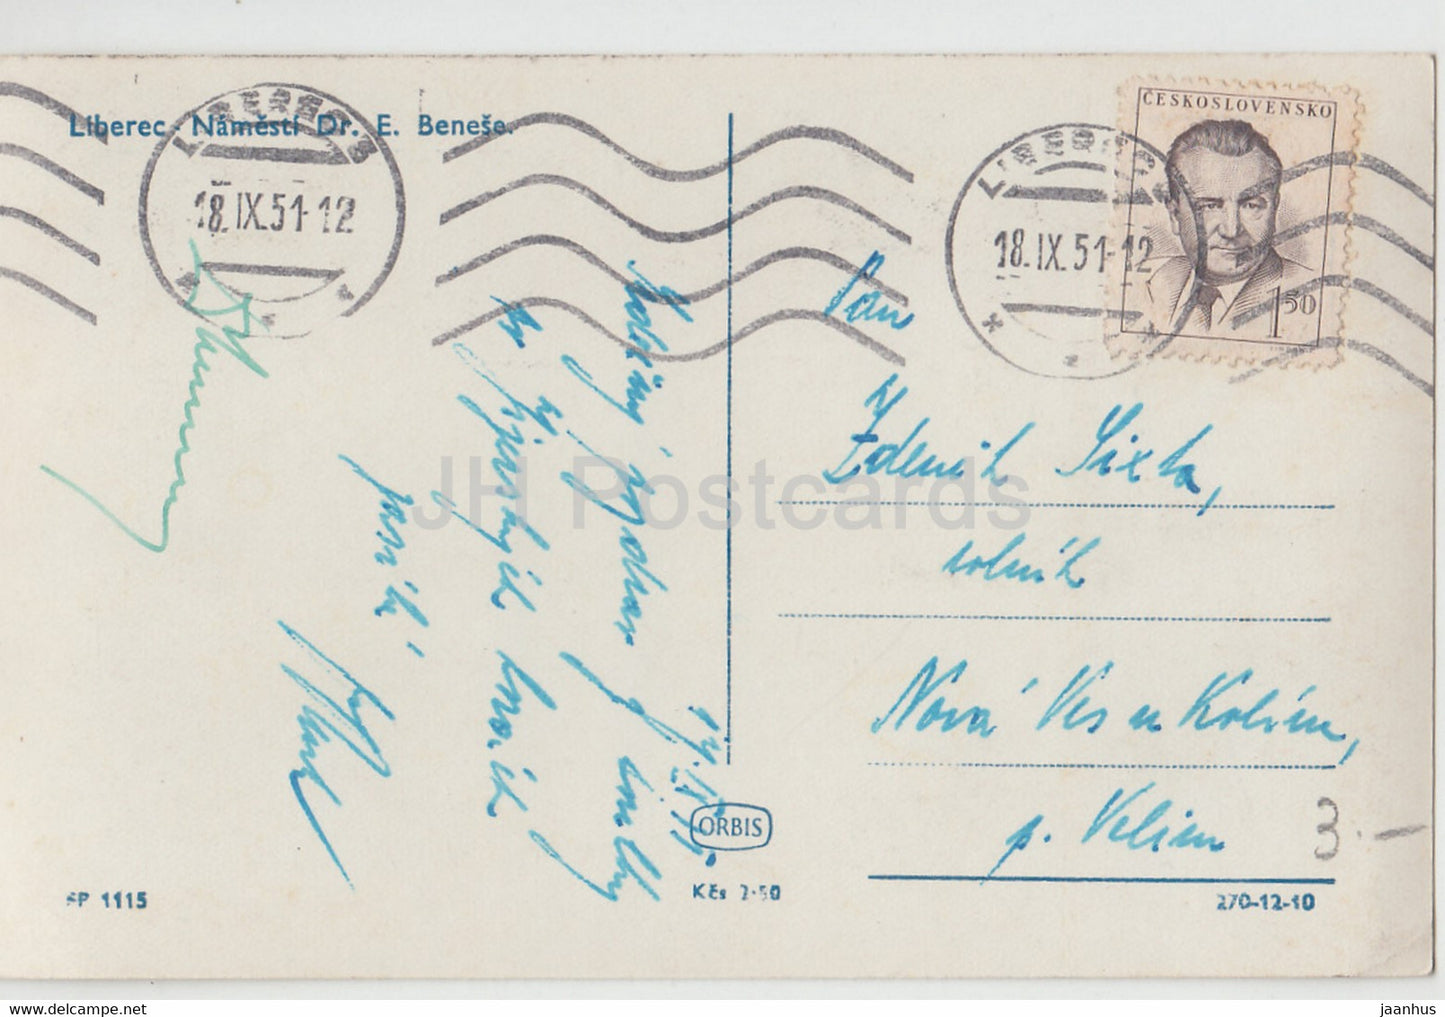 Liberec - Namesti Dr E. Benese - tram - old postcard - 1951 - Czechoslovakia - Czech Republic - used